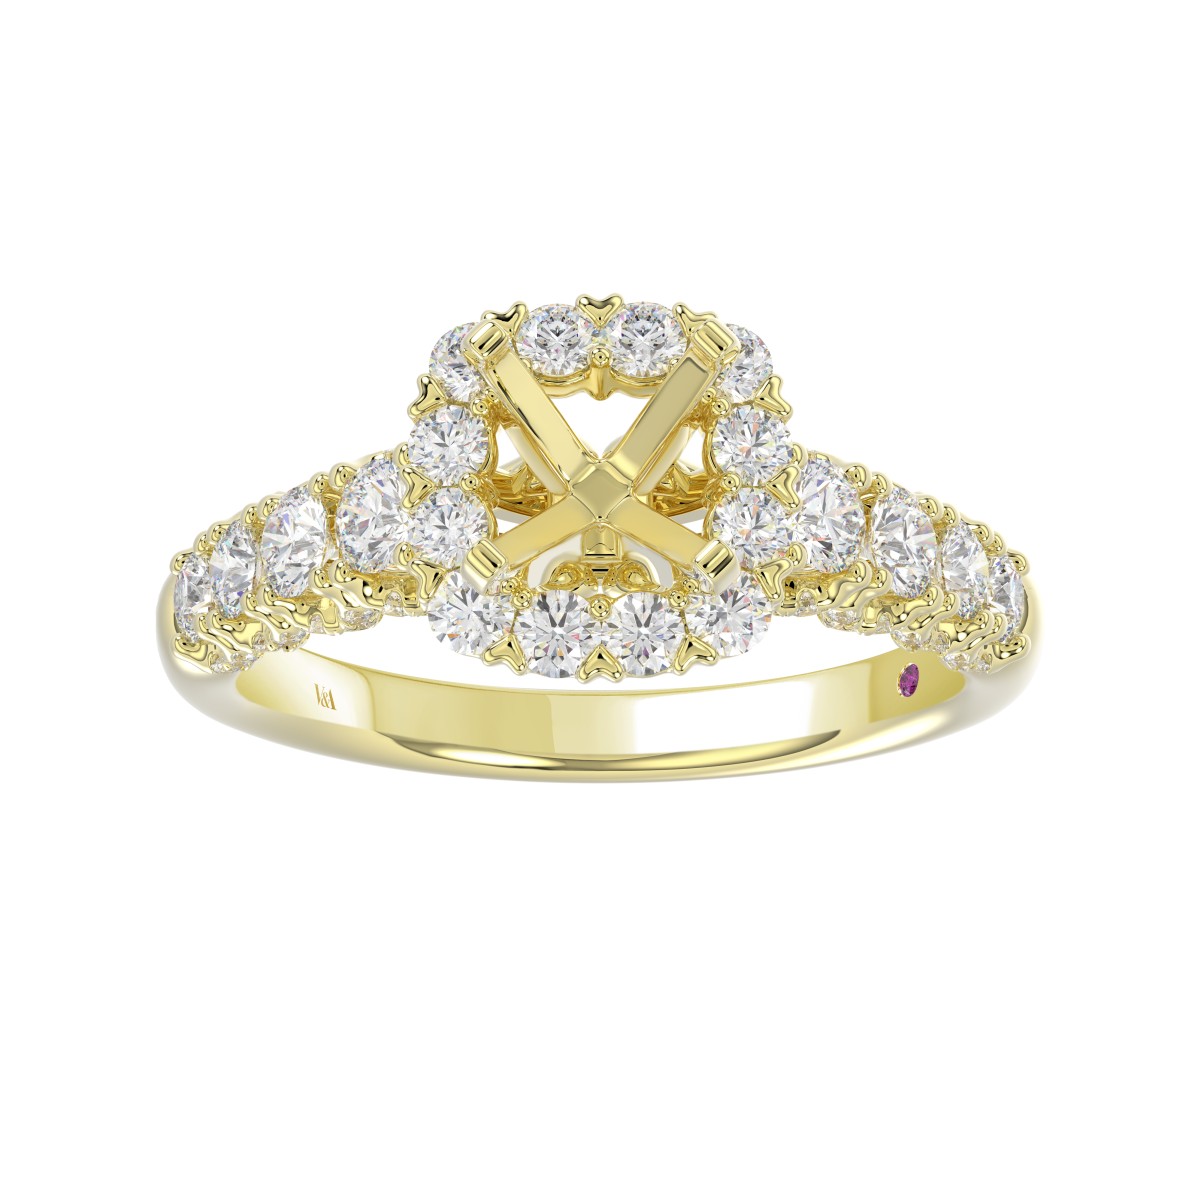 18K YELLOW GOLD 2.00CT ROUND DIAMOND SEMI MOUNT LADIES RING (CENTER STONE PRINCESS DIAMOND 1.00CT)